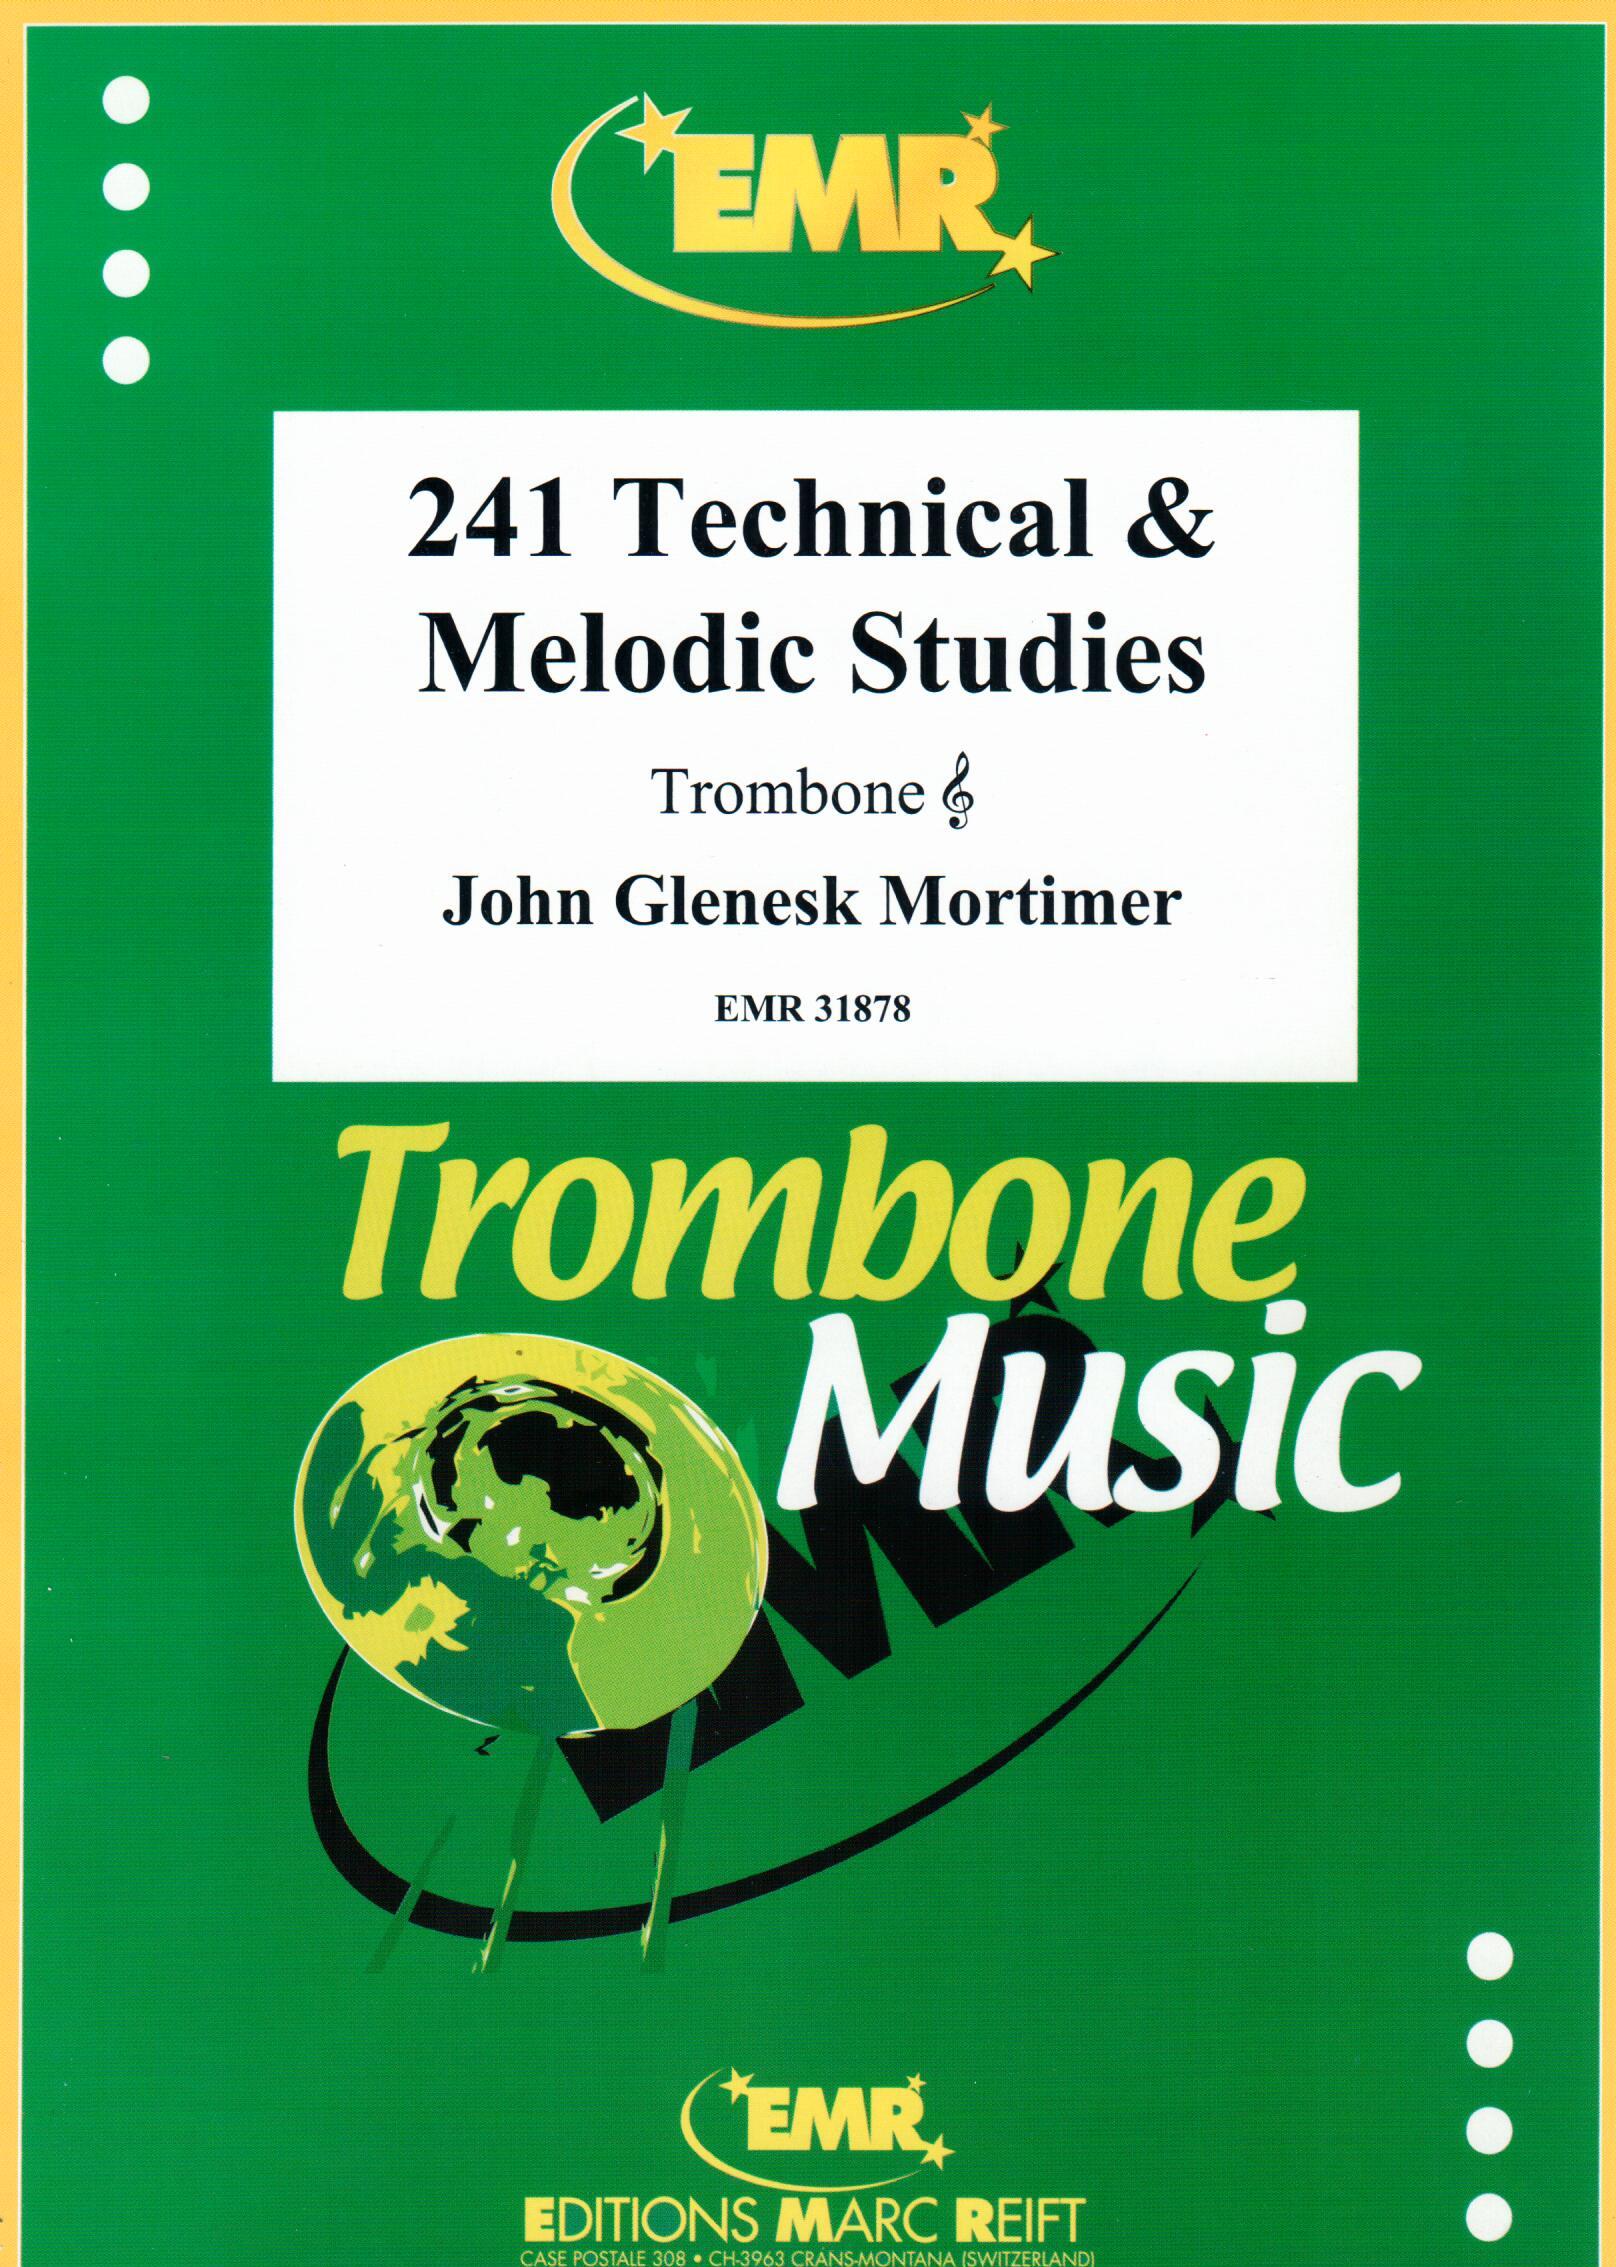 241 TECHNICAL & MELODIC STUDIES, SOLOS - Trombone